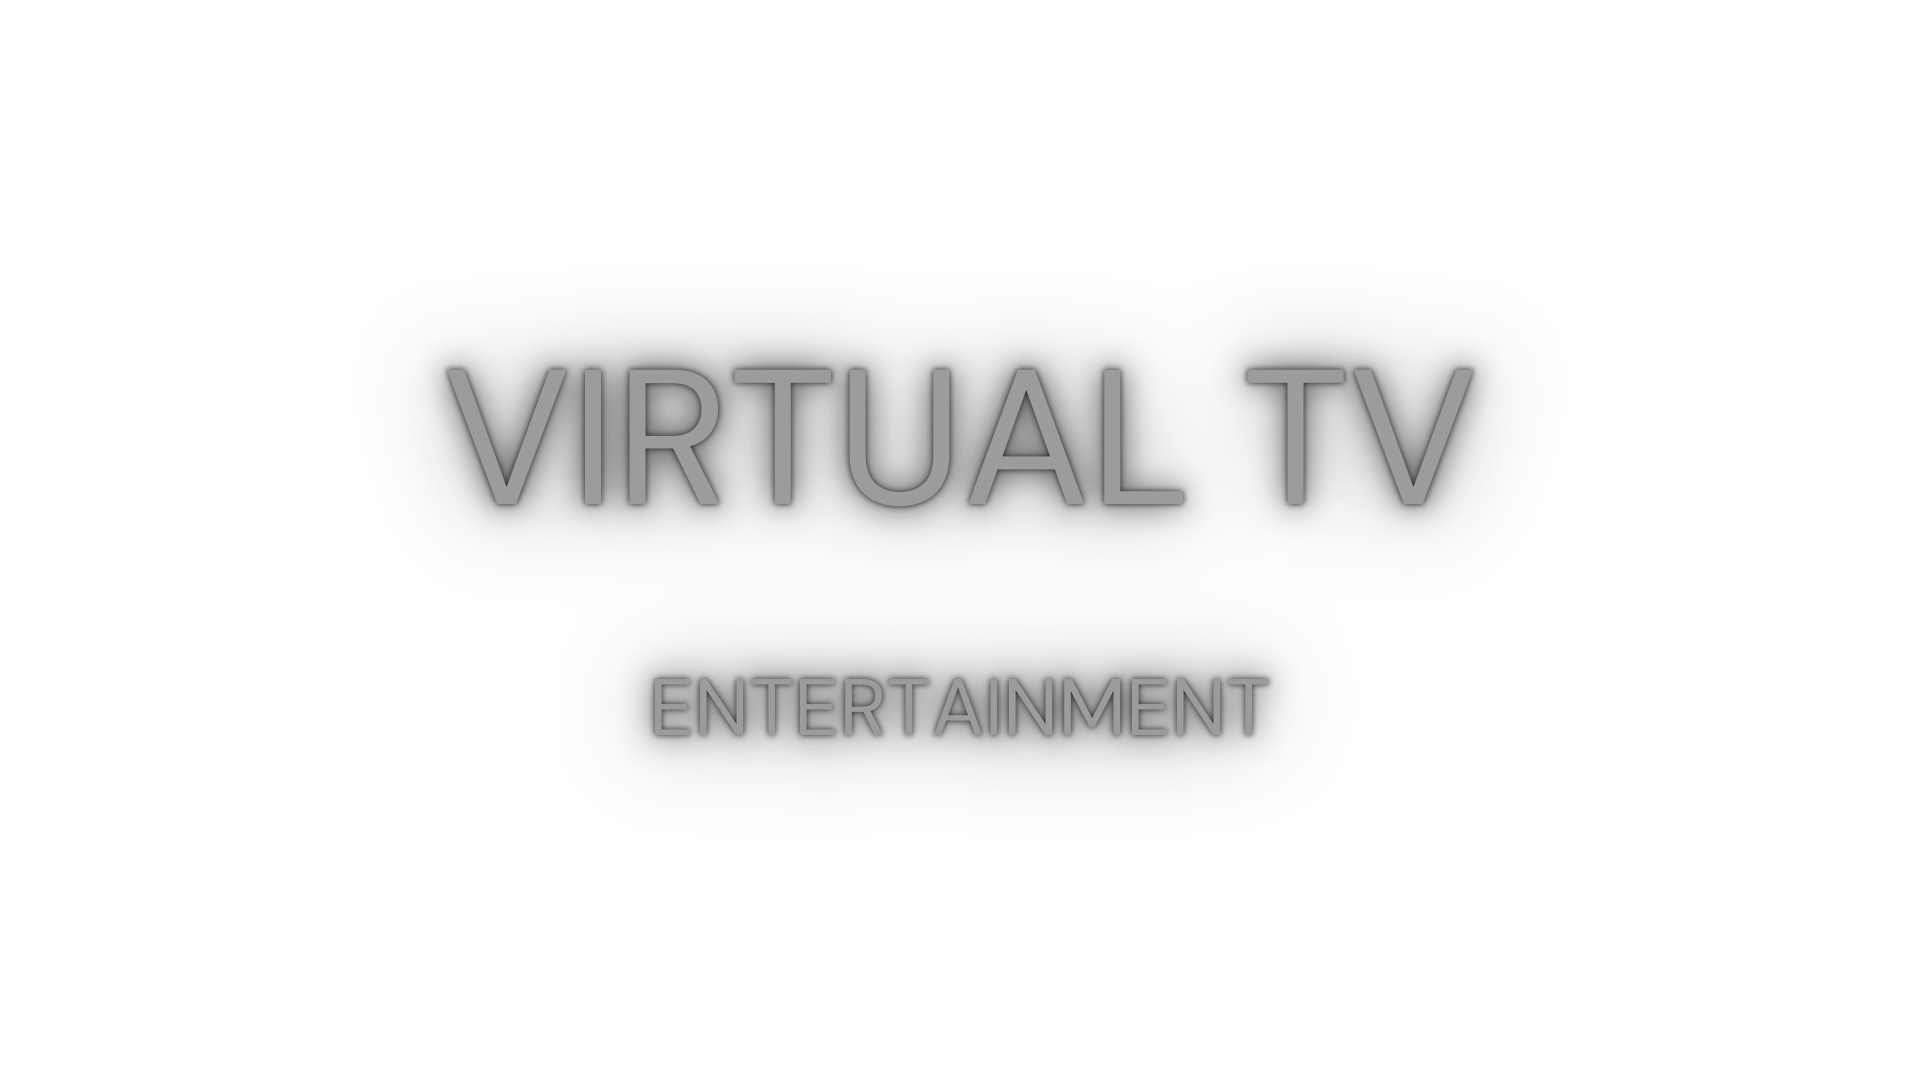 VIRTUAL TV